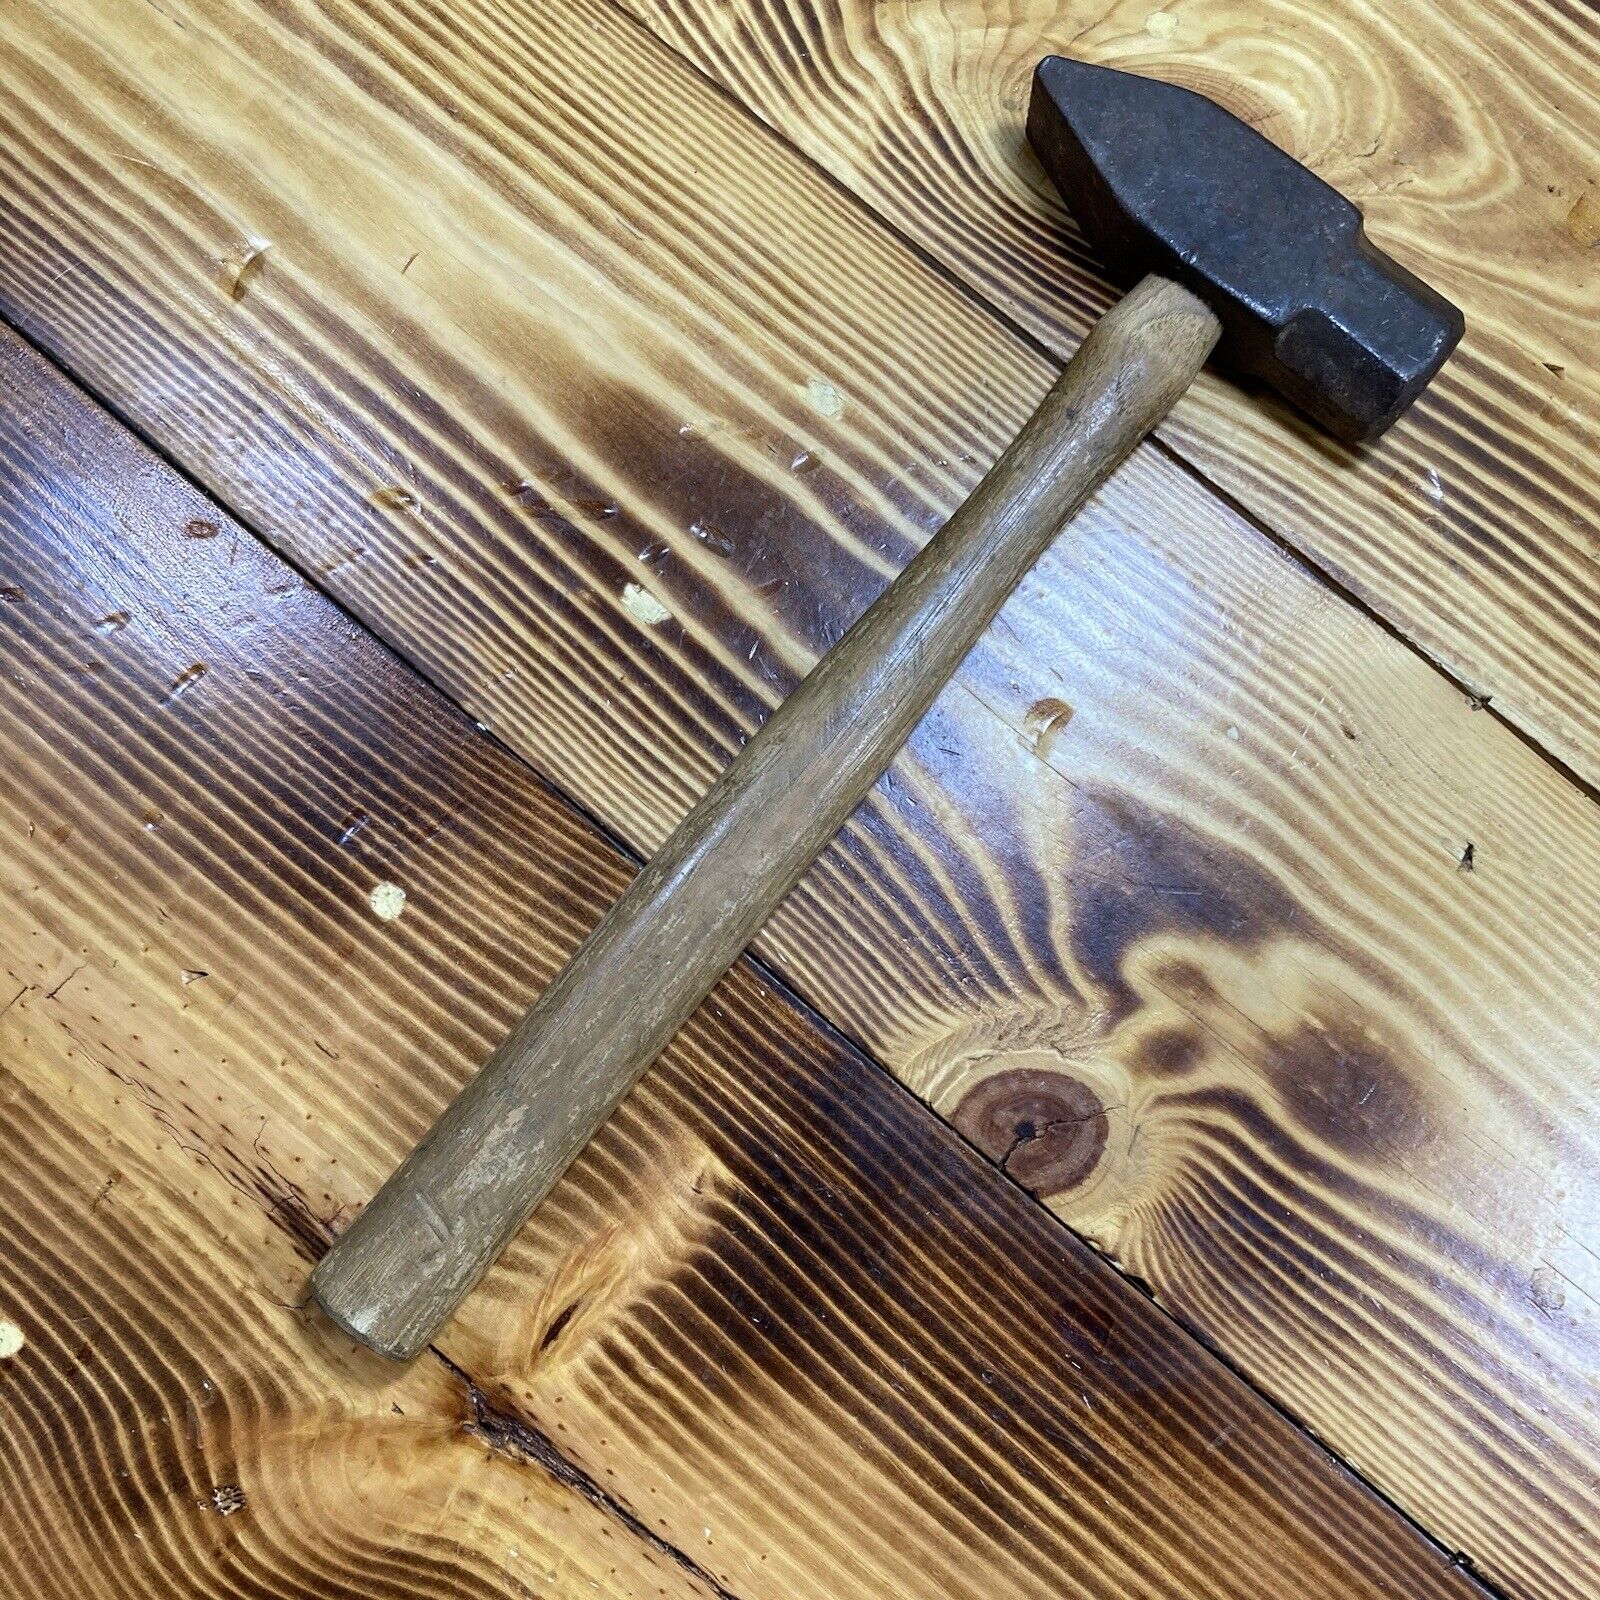 Vintage WARREN-TEED Blacksmith Cross Peen Hammer 3lbs  Heavy Duty